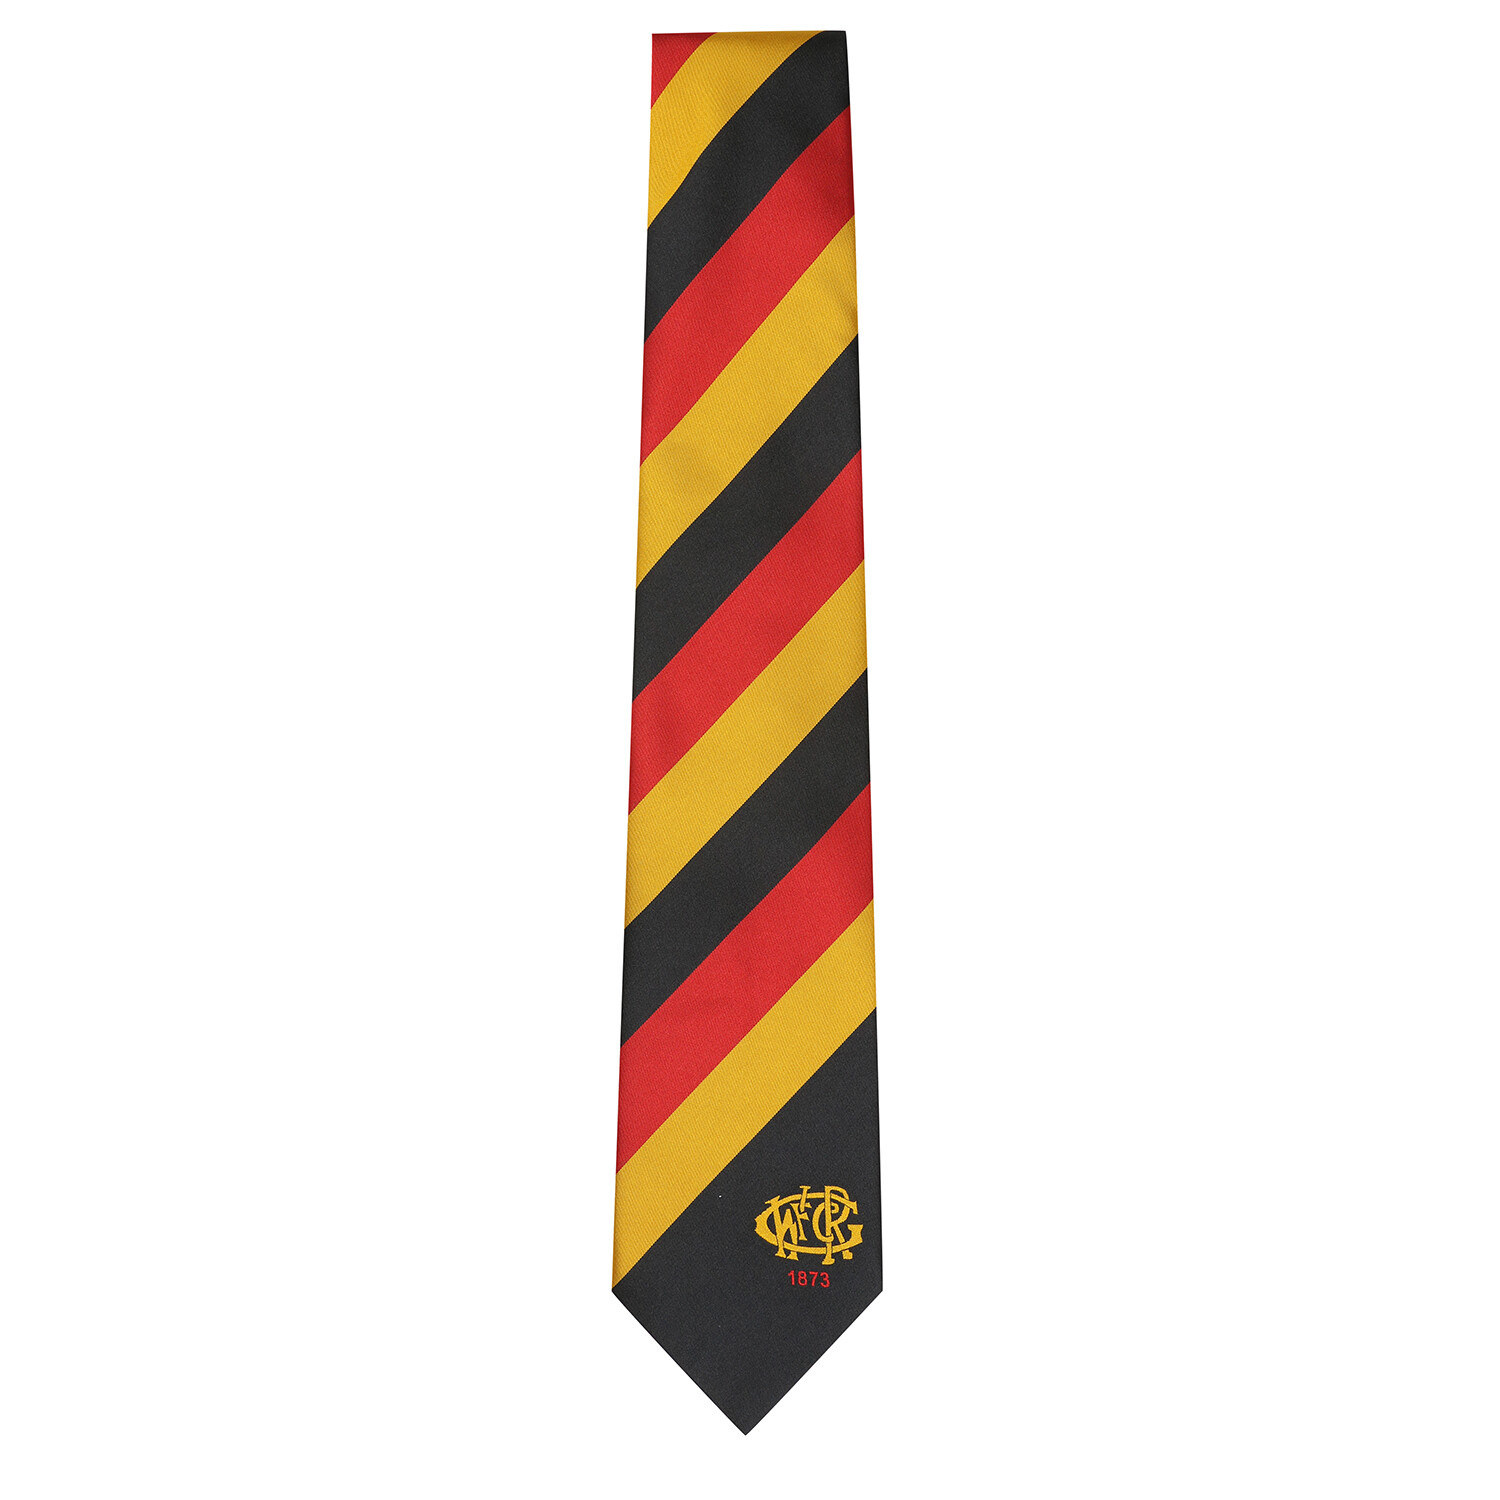 GWRFC Club Tie